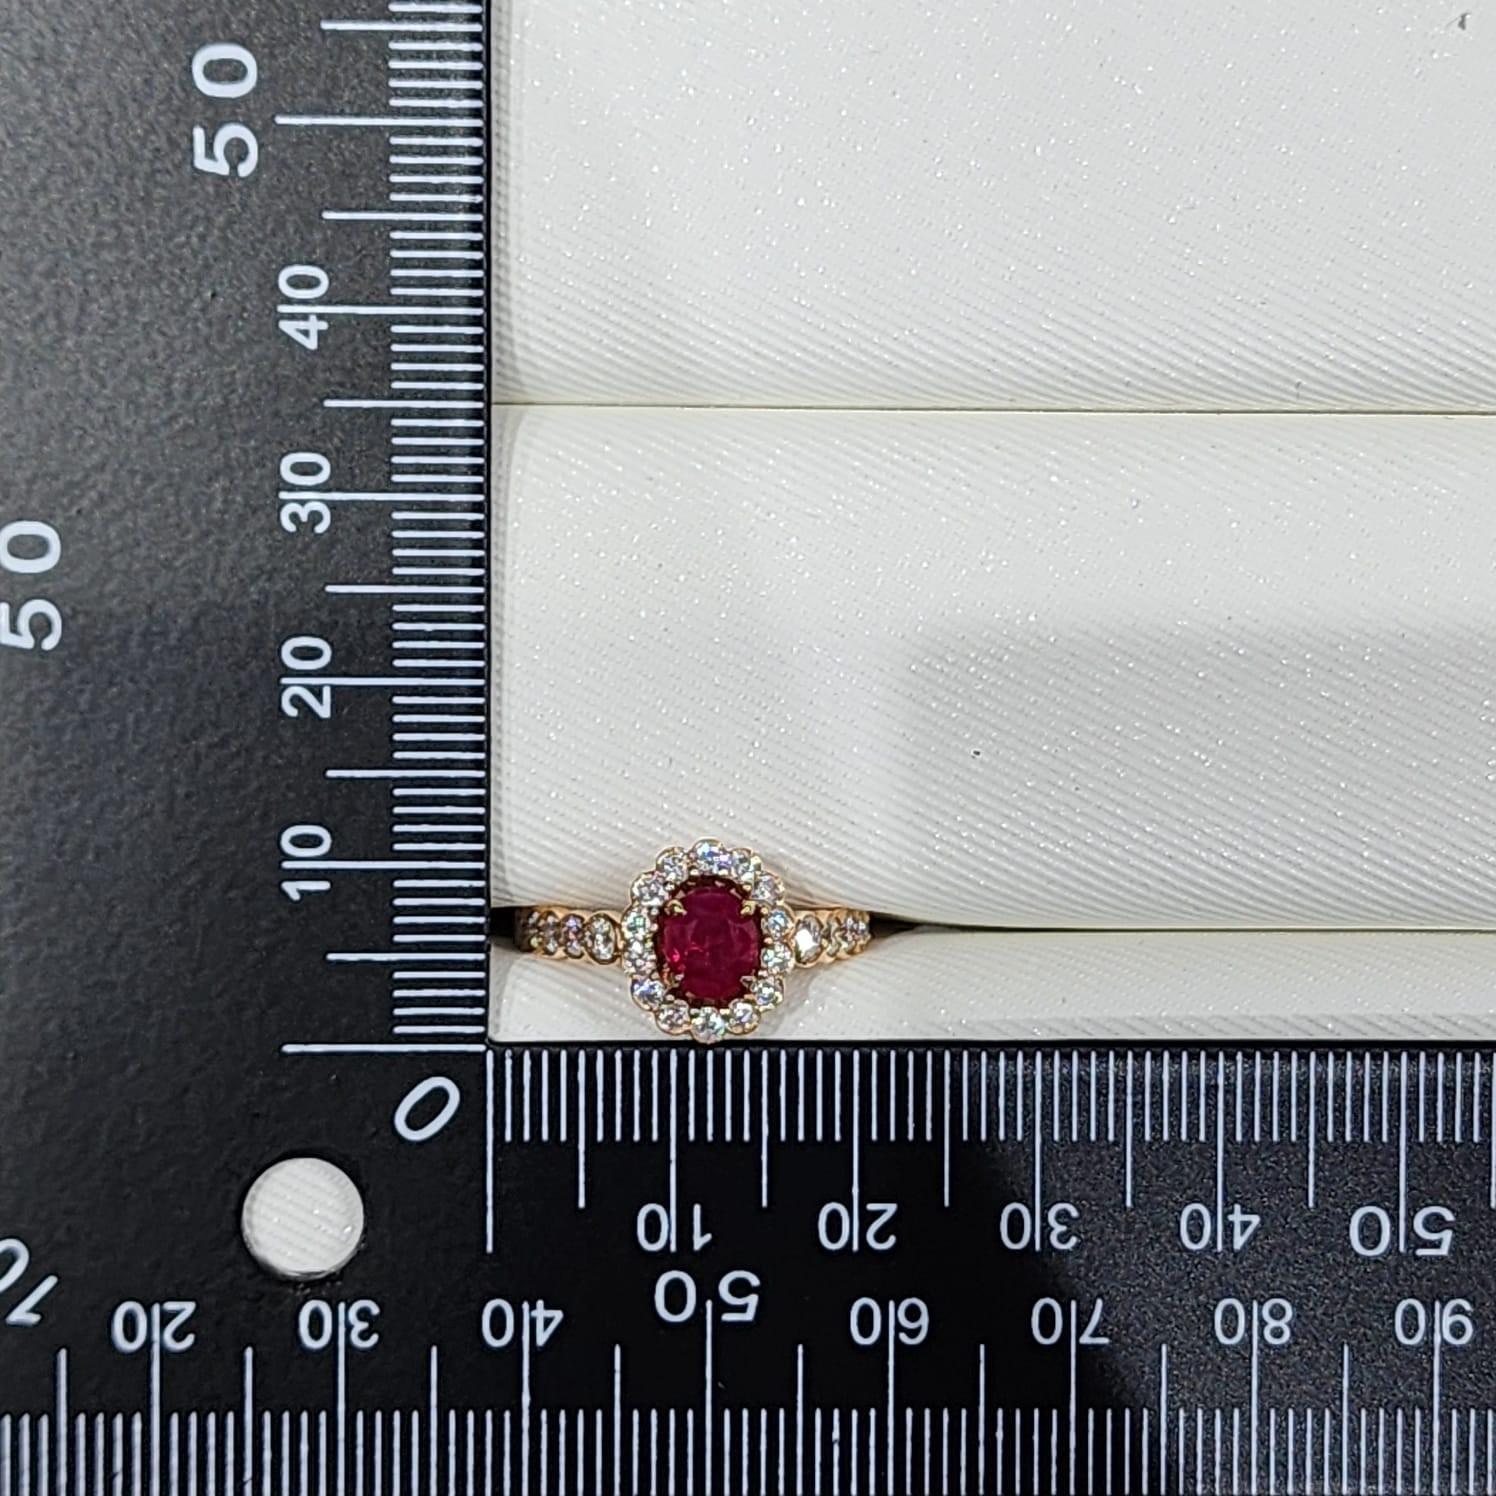 IGI 0.82 Carat Ruby Diamond Ring in 18K Rose Gold For Sale 2